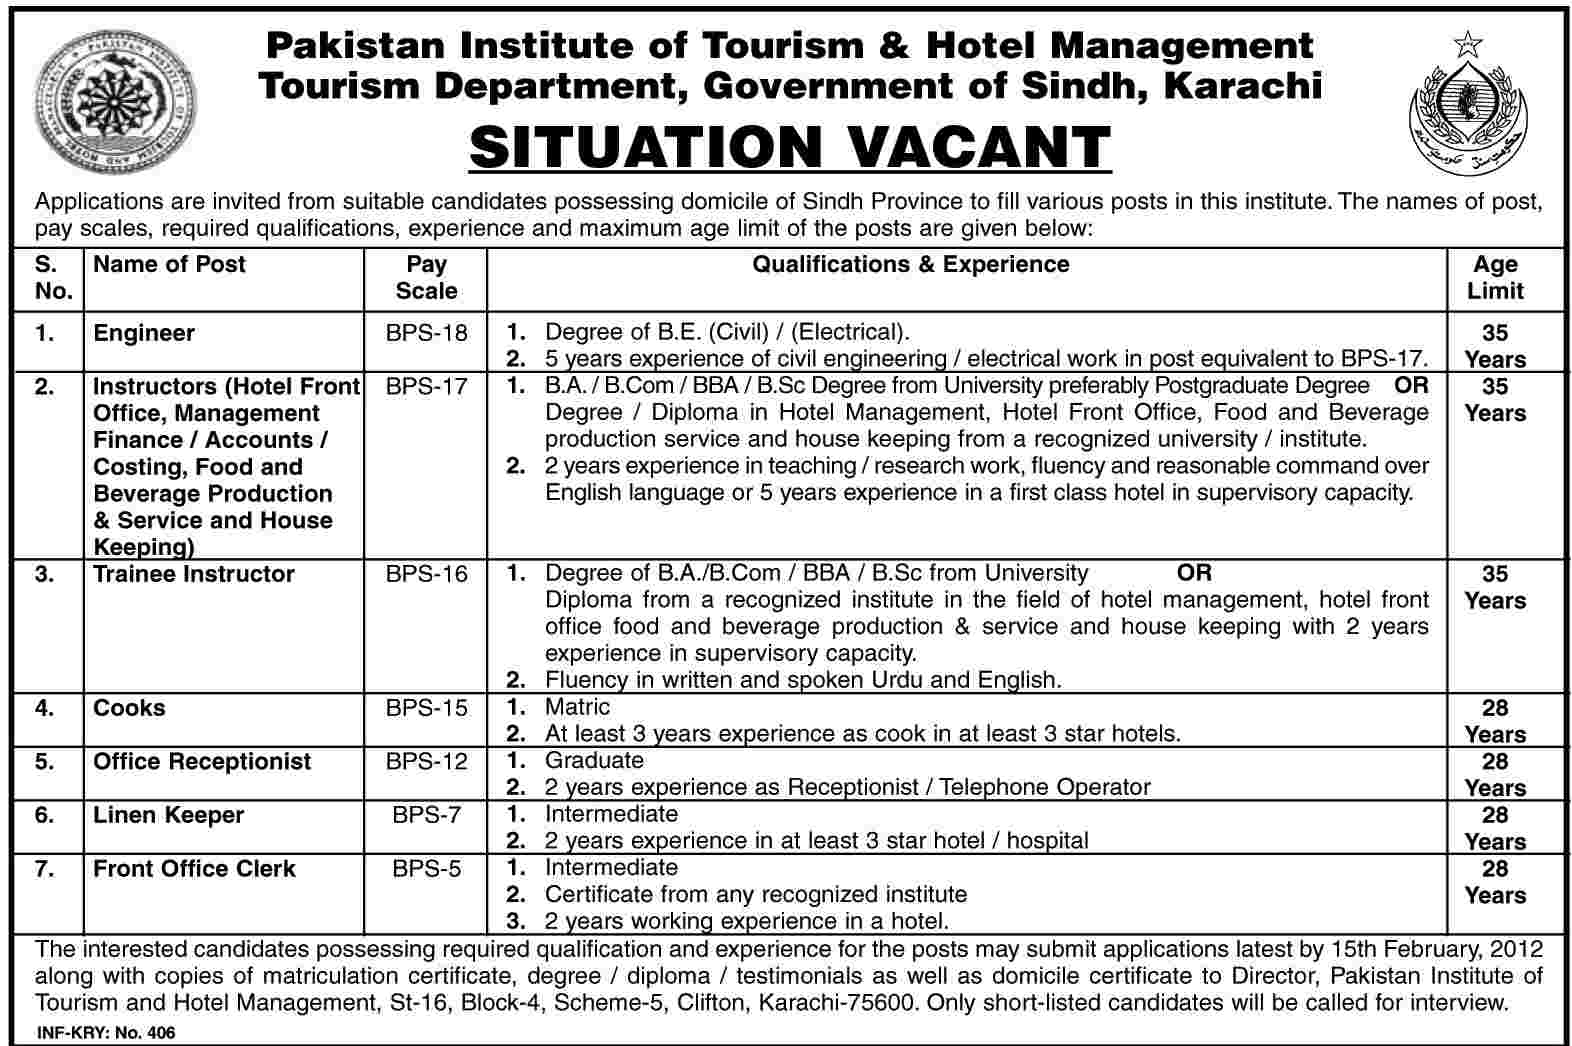 Pakistan Institute of Tourism & Hotel Management, Karachi Jobs Opportunity